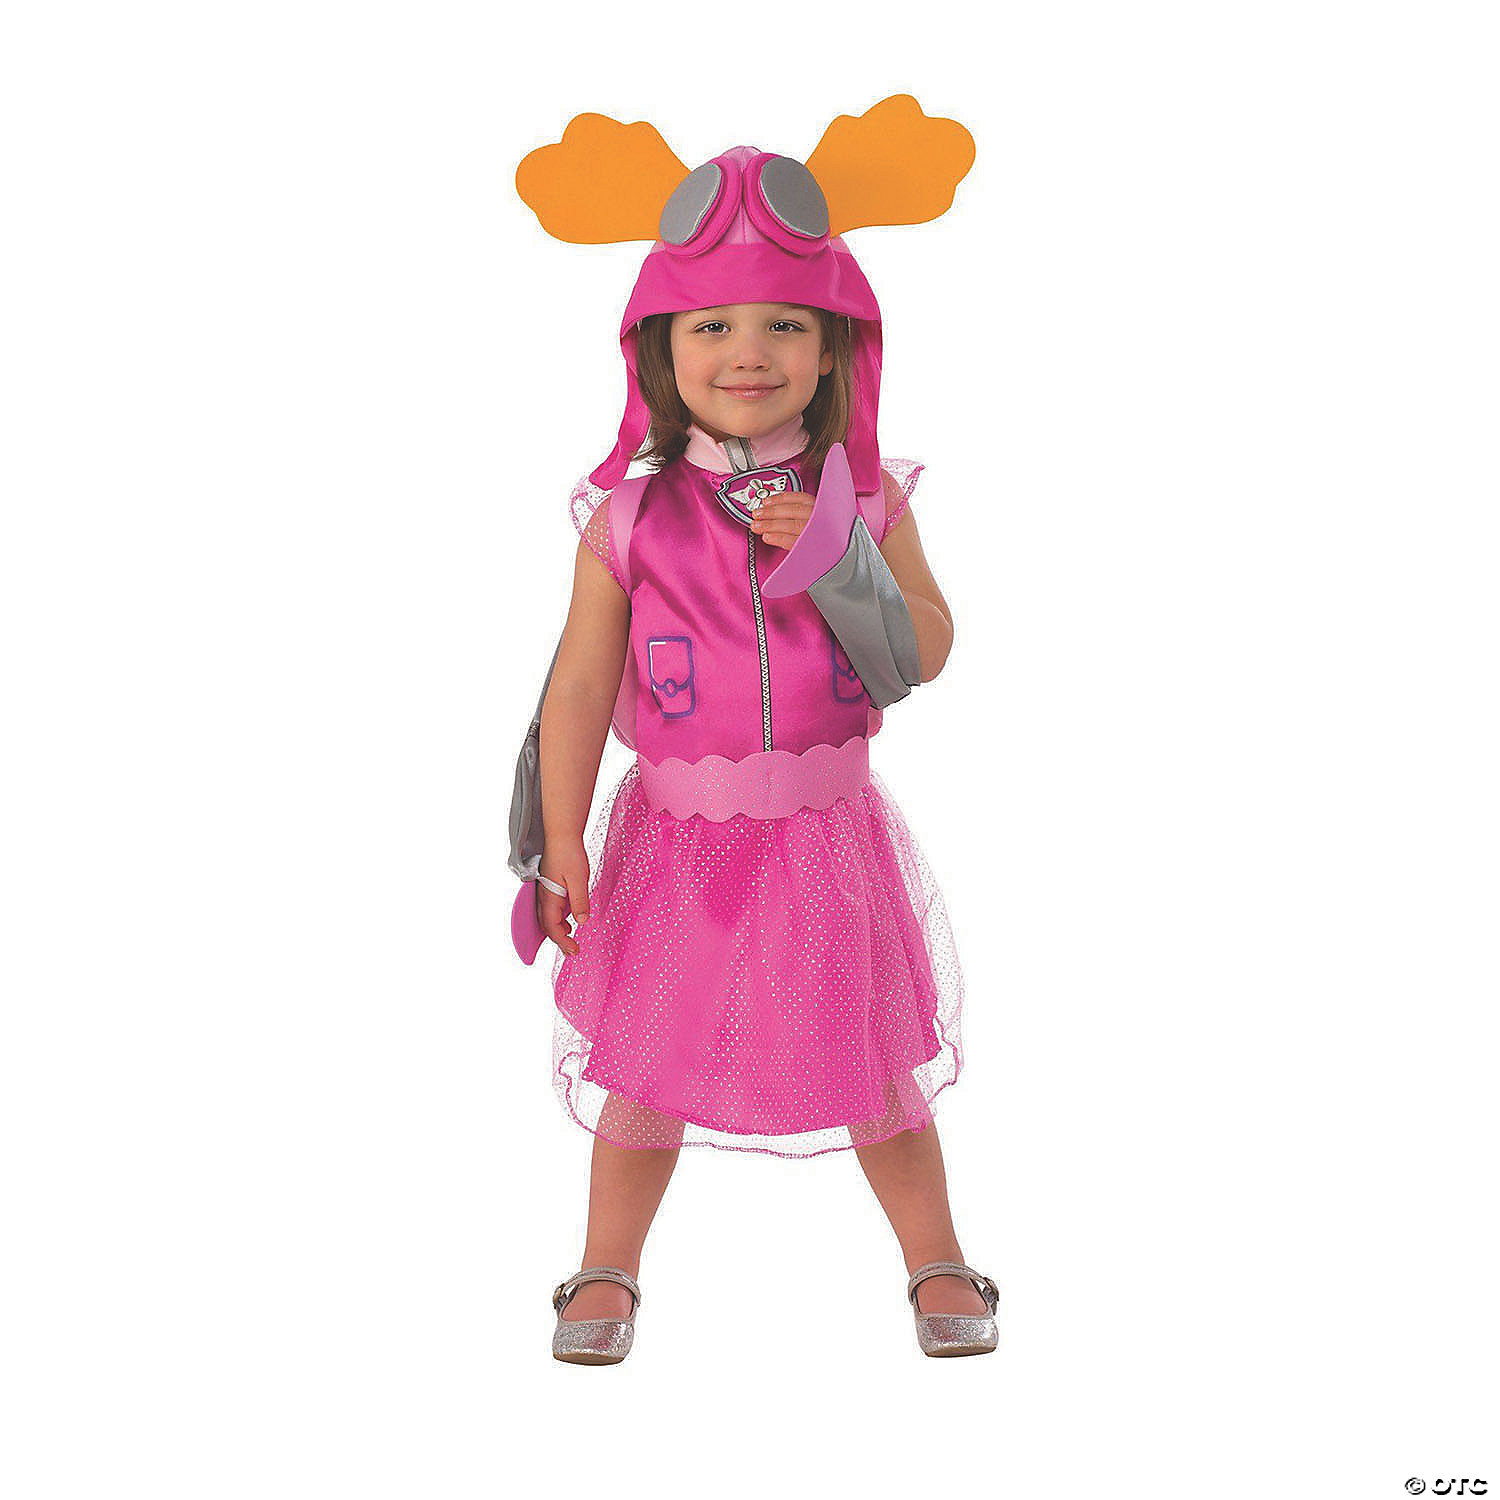 Kid's Paw Patrol Skye Costume with Sound - Extra Small